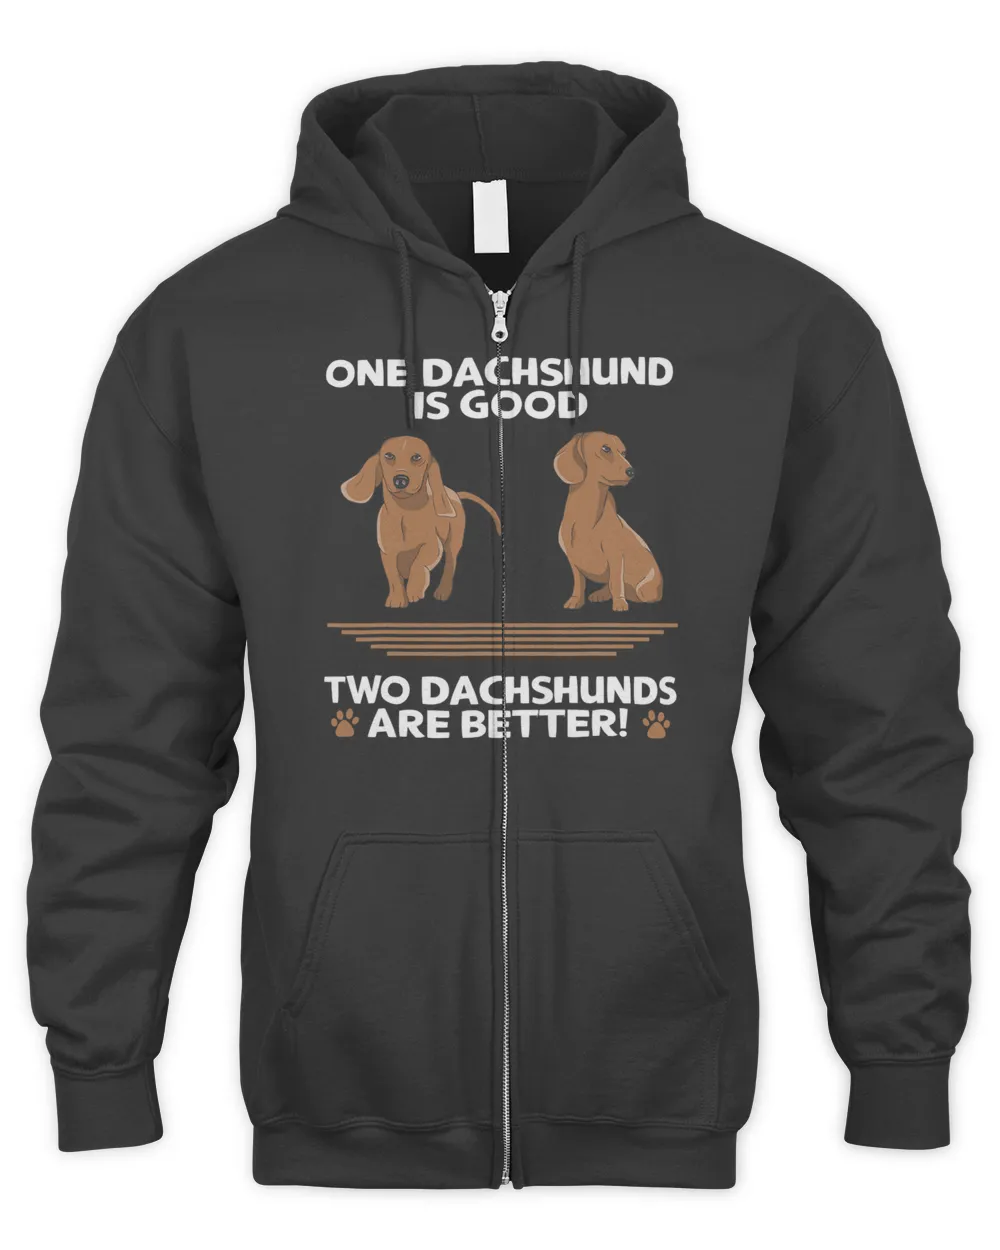 Dachshund Dog One Dachshund is good two dachshunds are better Dachshund